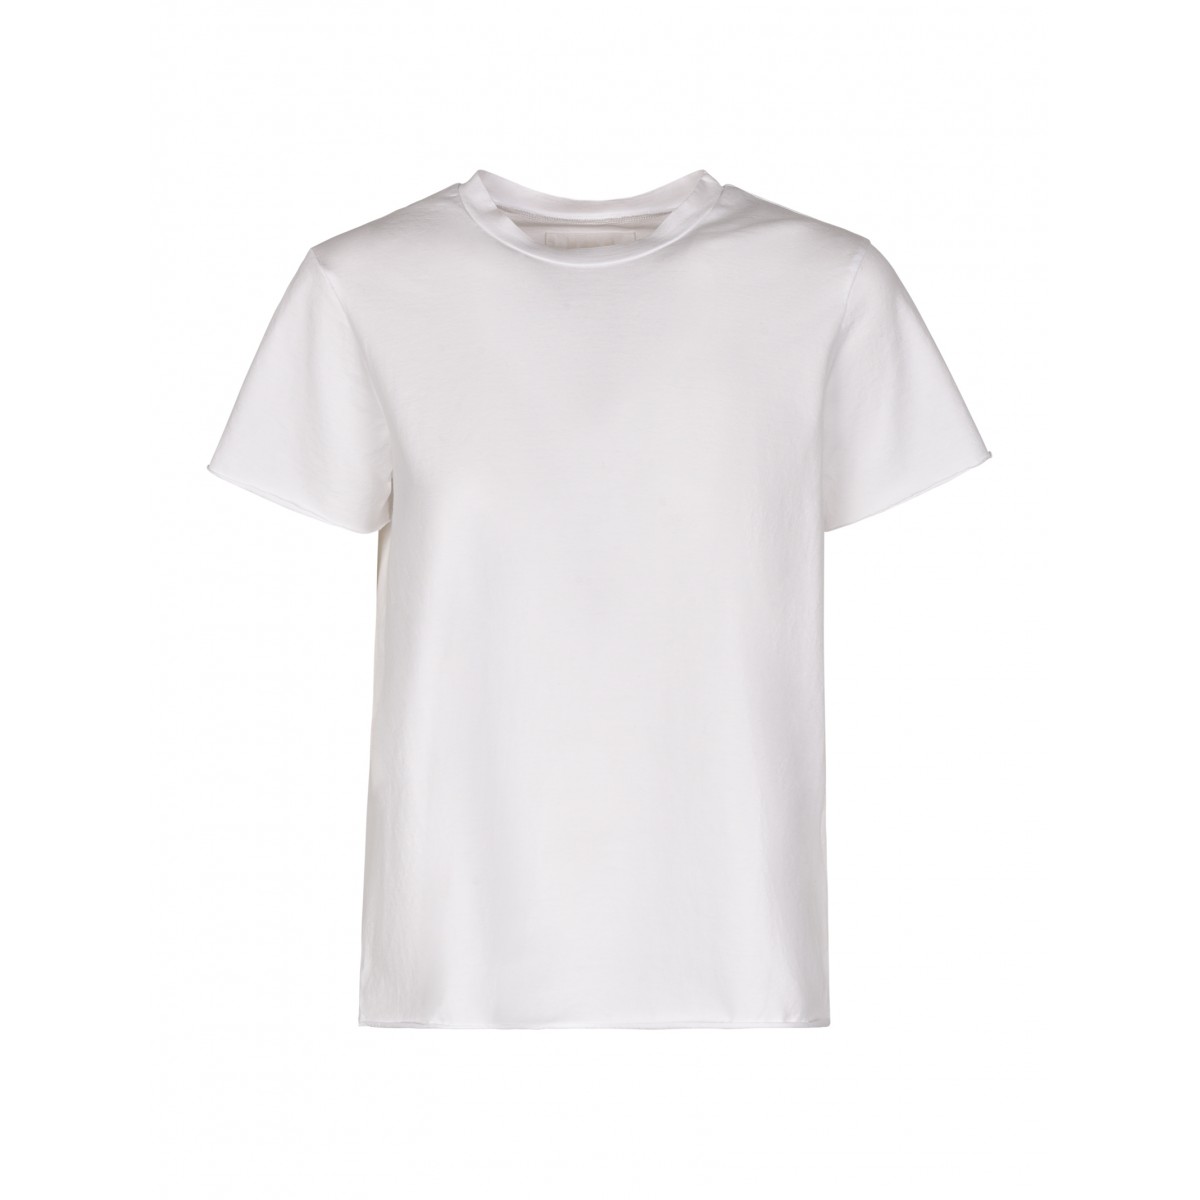 White Cotton basic T-Shirt